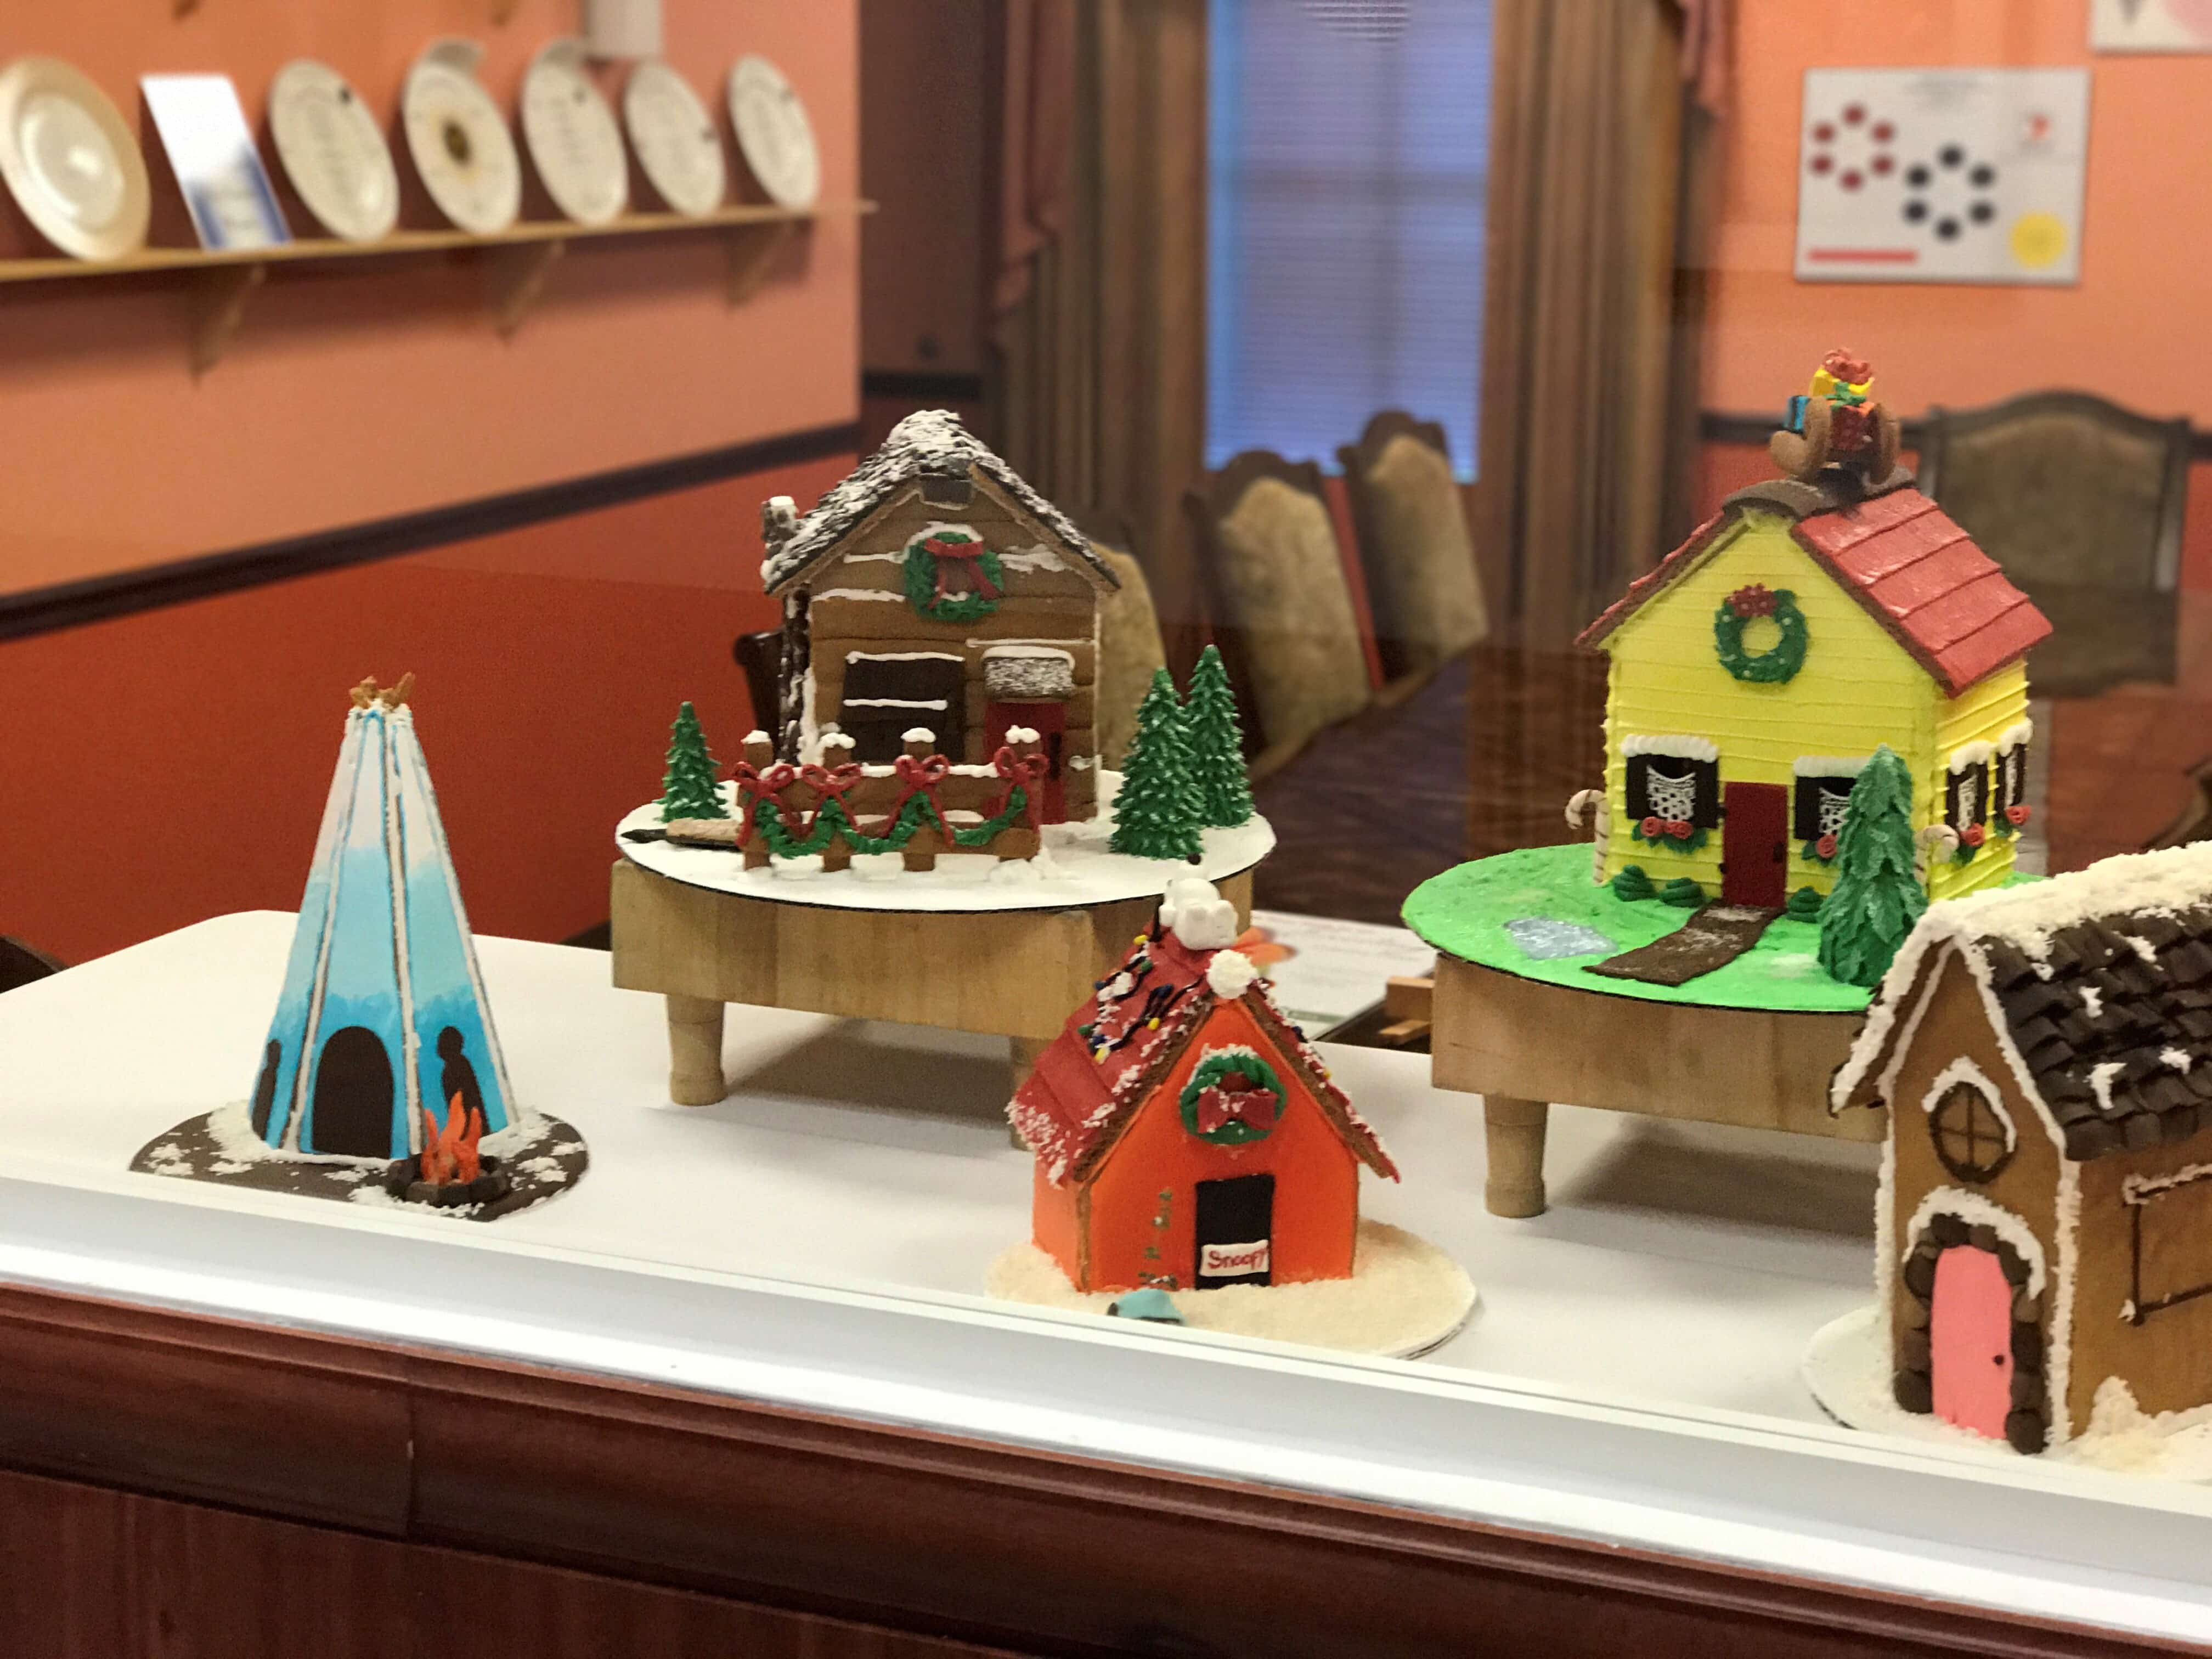 Sarasota Creates a Gingerbread Christmas Village